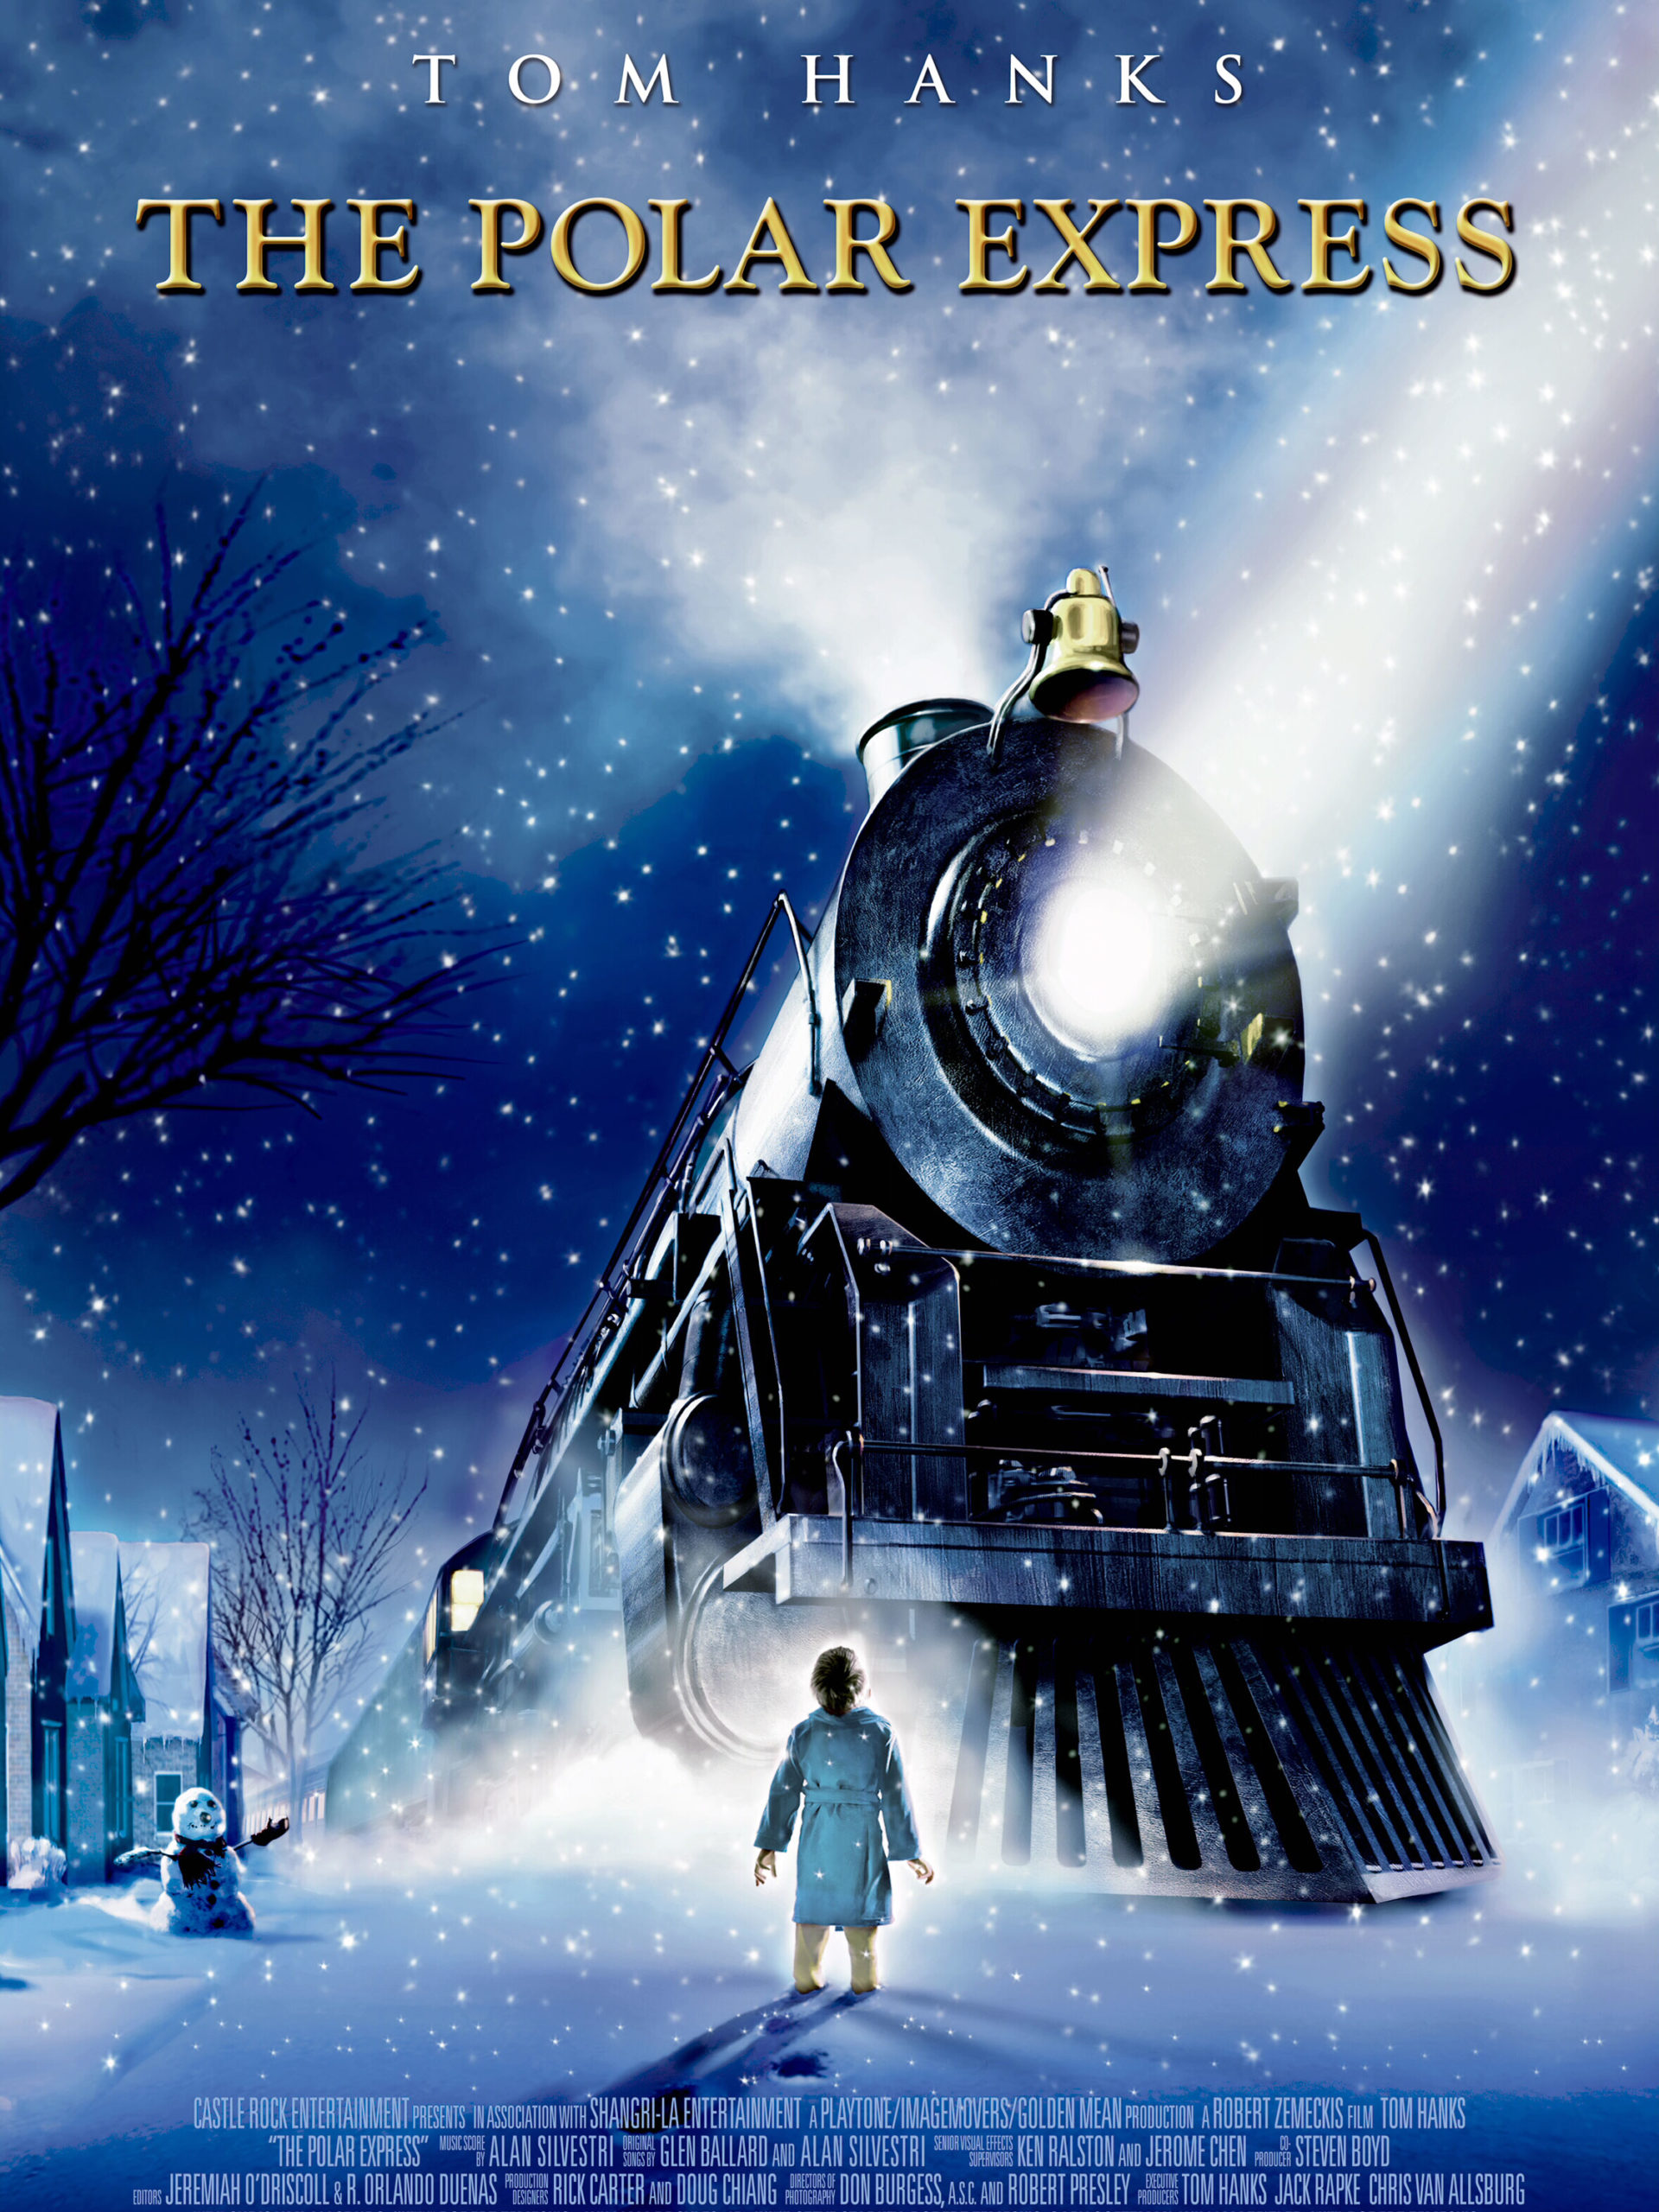 Polar Express | Christmas Movies for Family